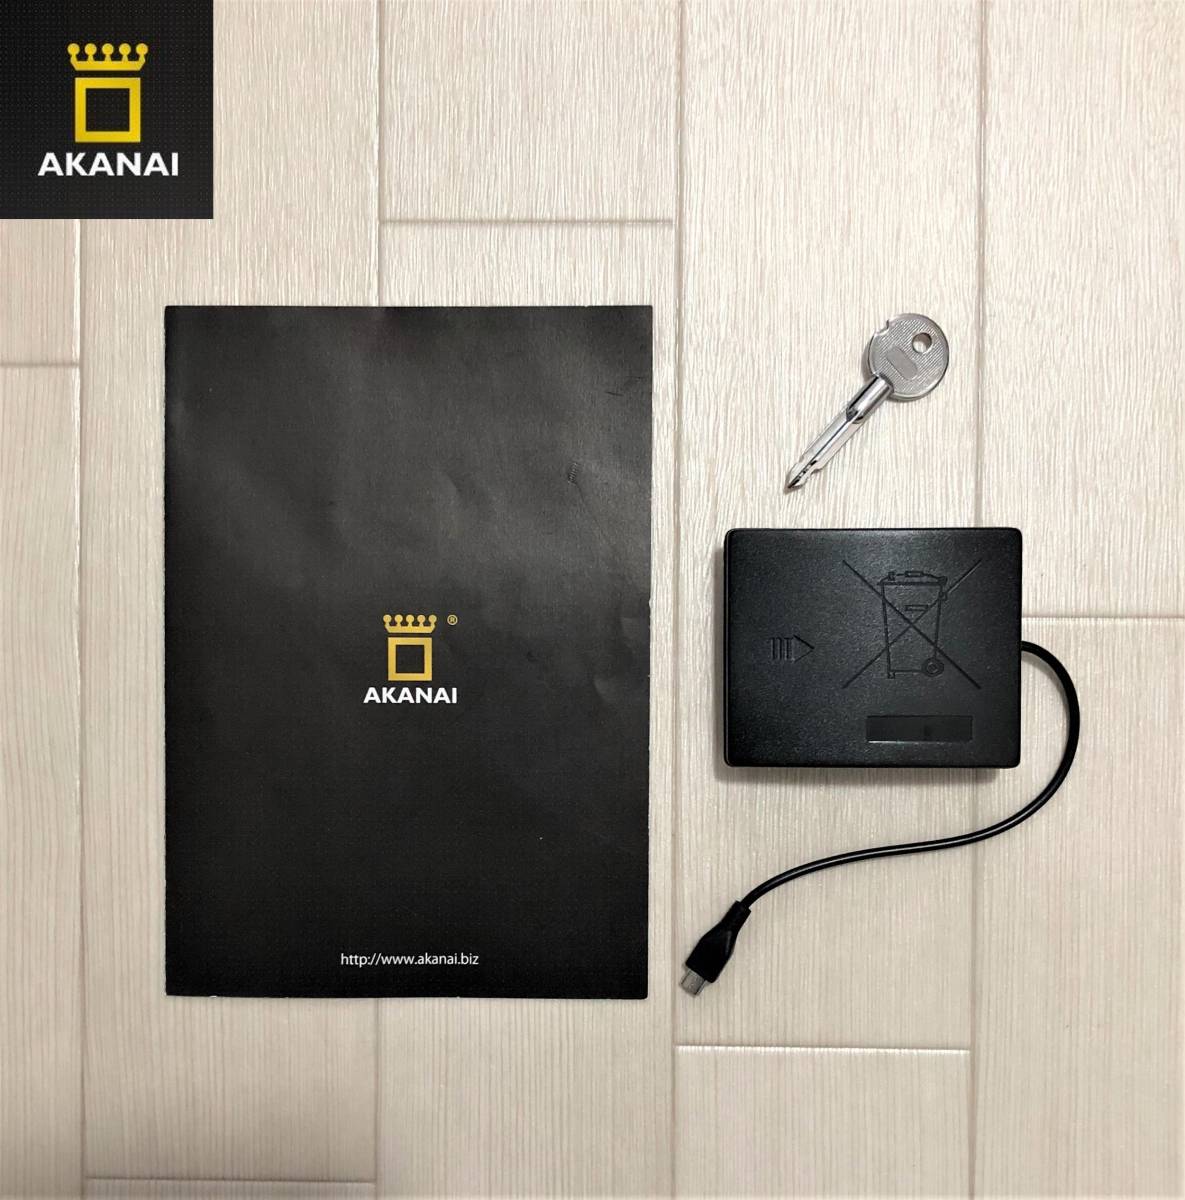 AKANAIa kana i hotel * customer . oriented safety box small size safe BLACK black black CE Mark acquisition RoHS acquisition 